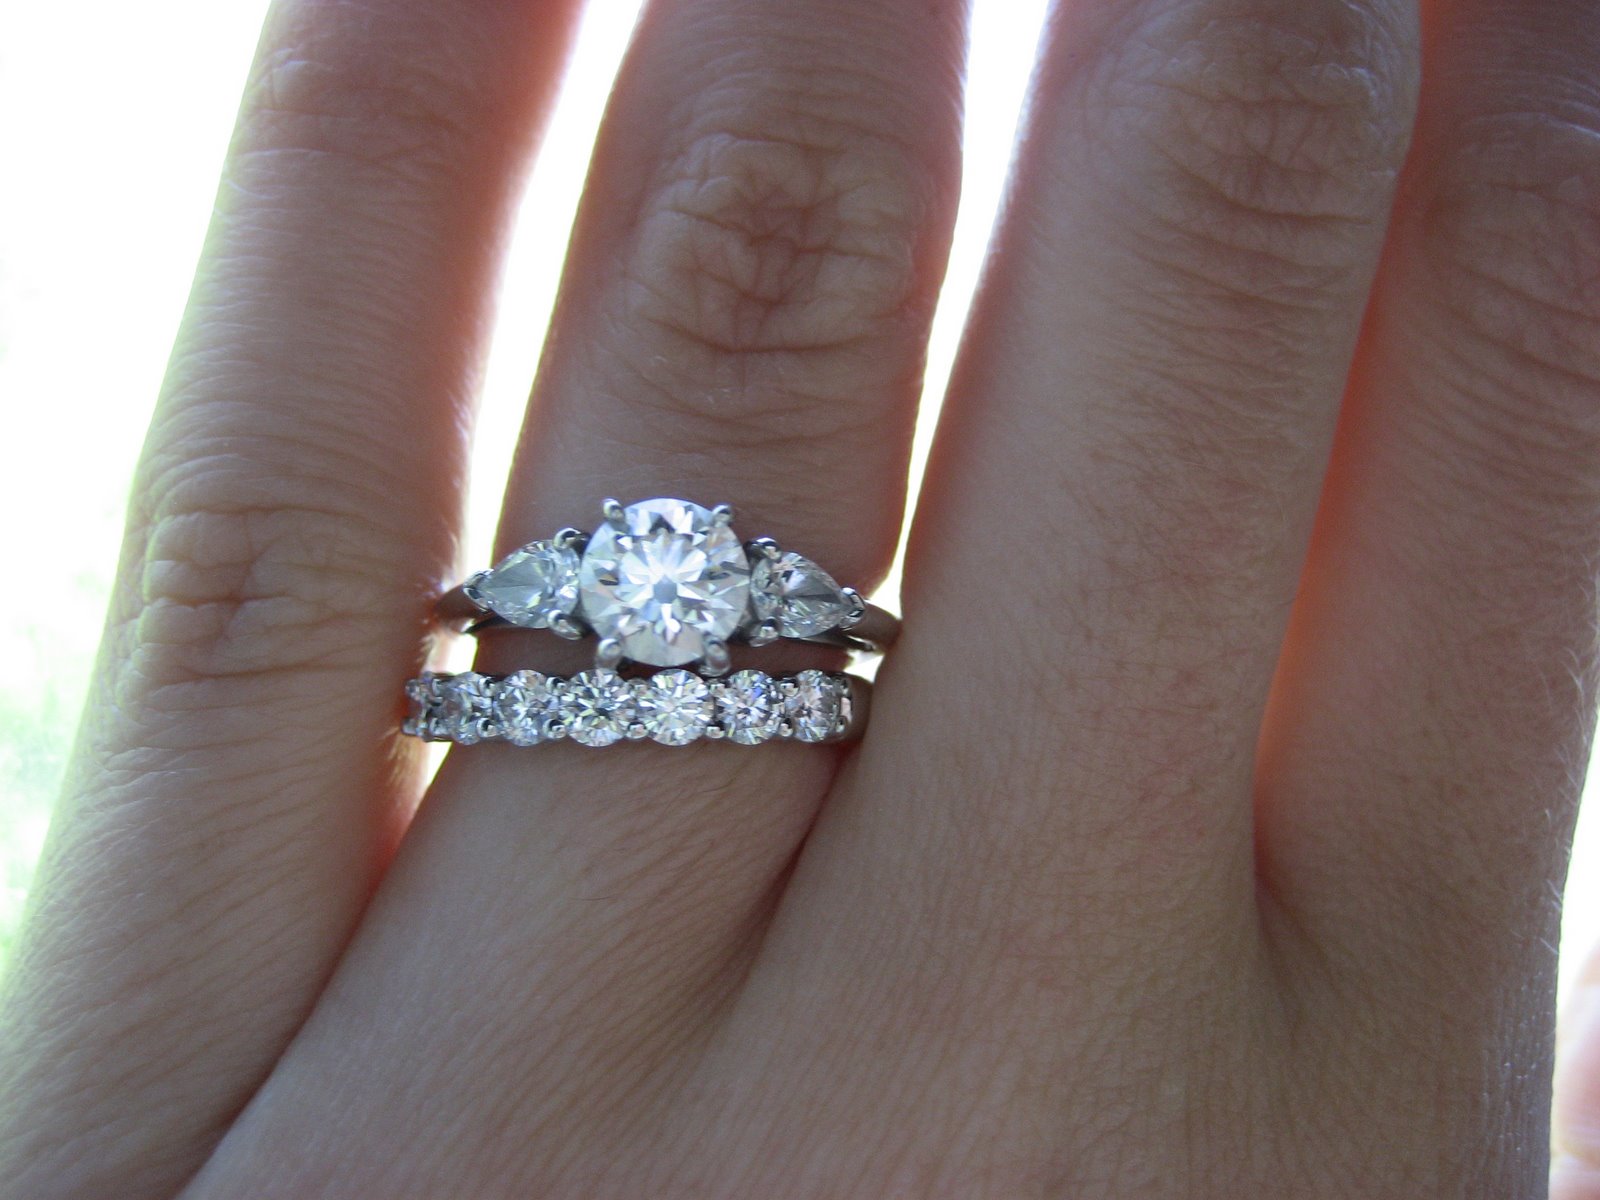 Wedding band engagement ring wear